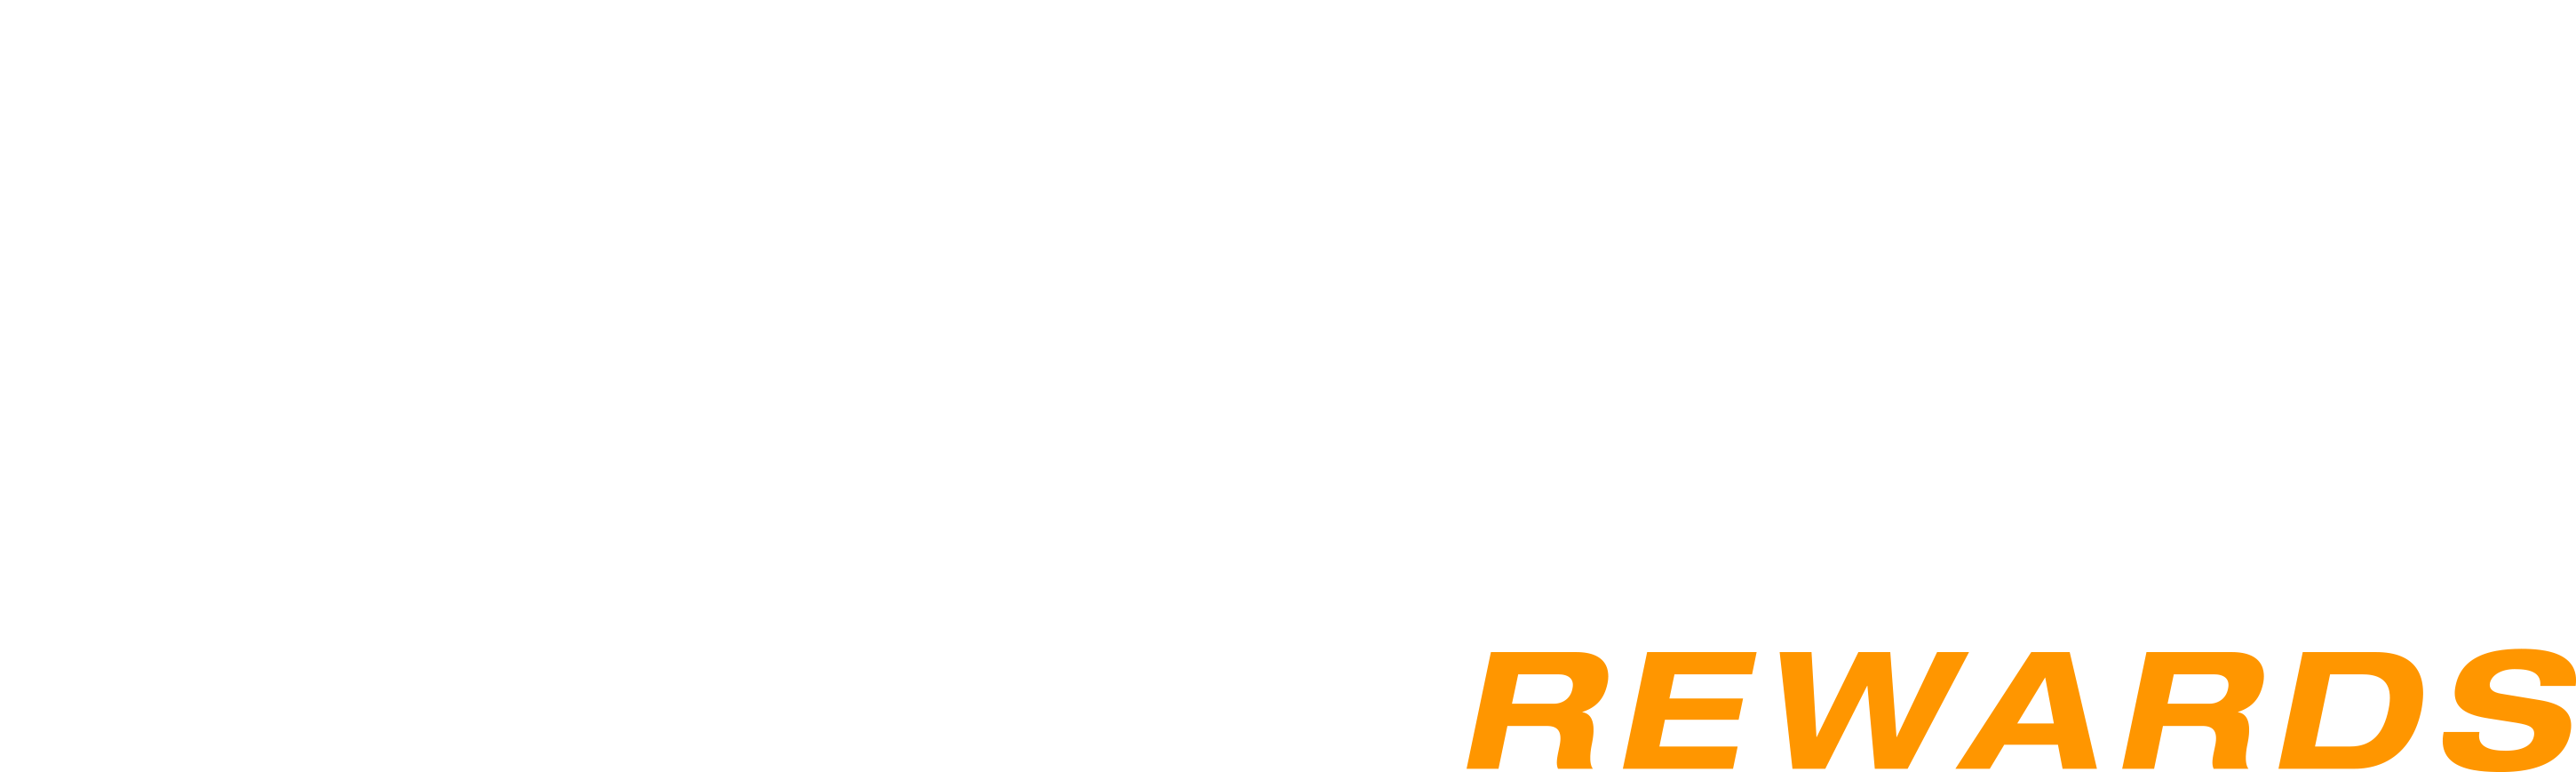 Asus Advantage Rewards Logo PNG image